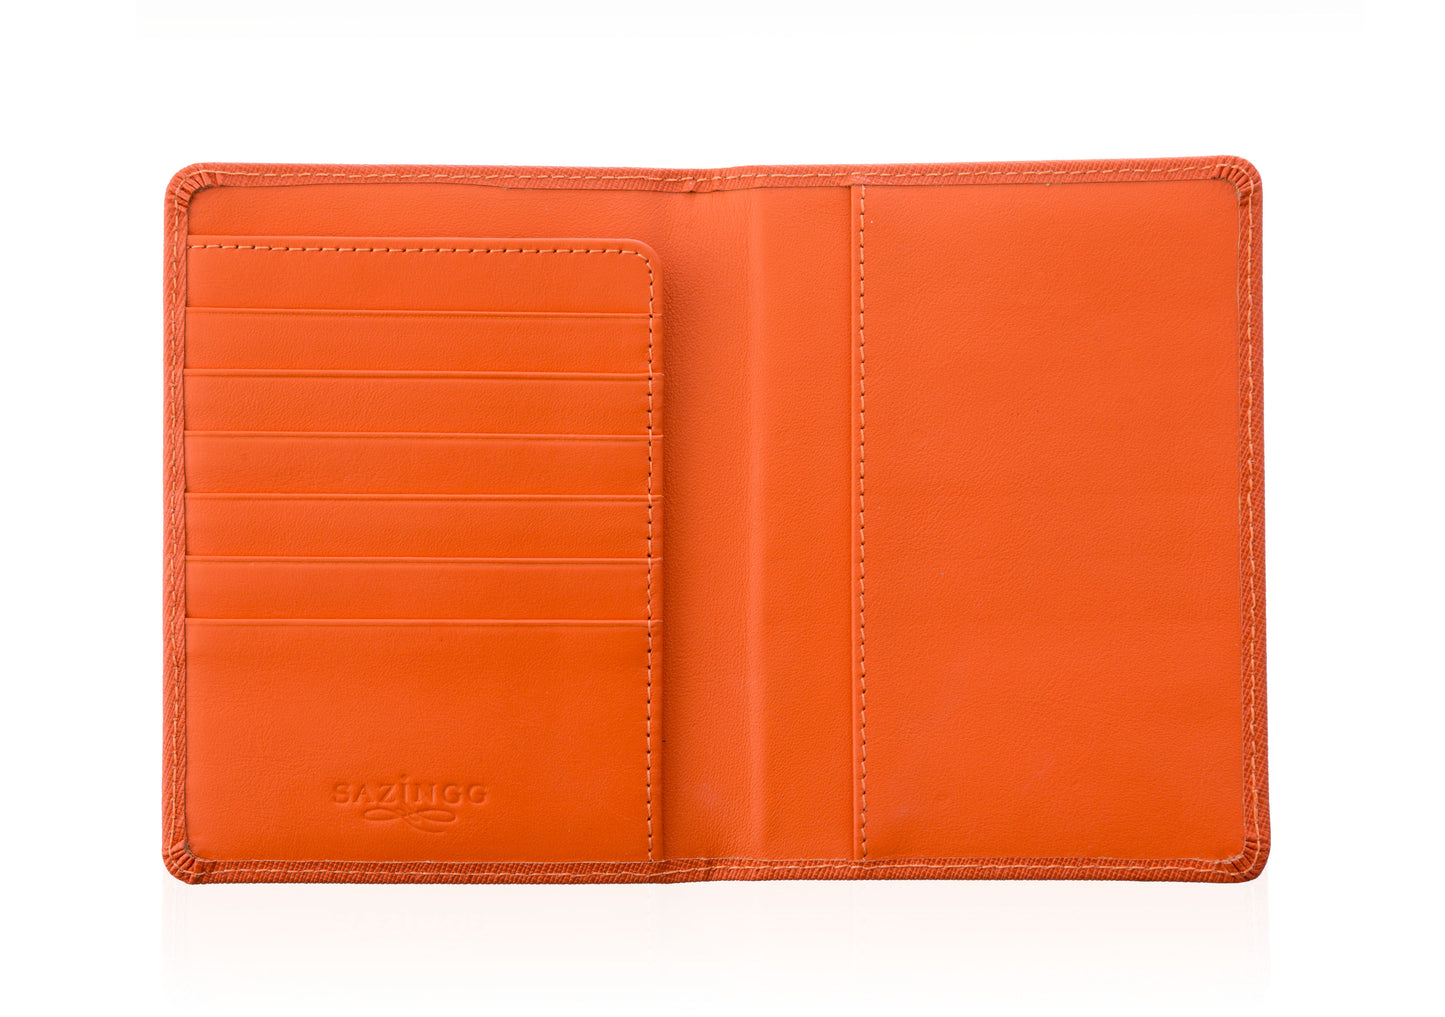 Passport Cover in Orange Textured Leather